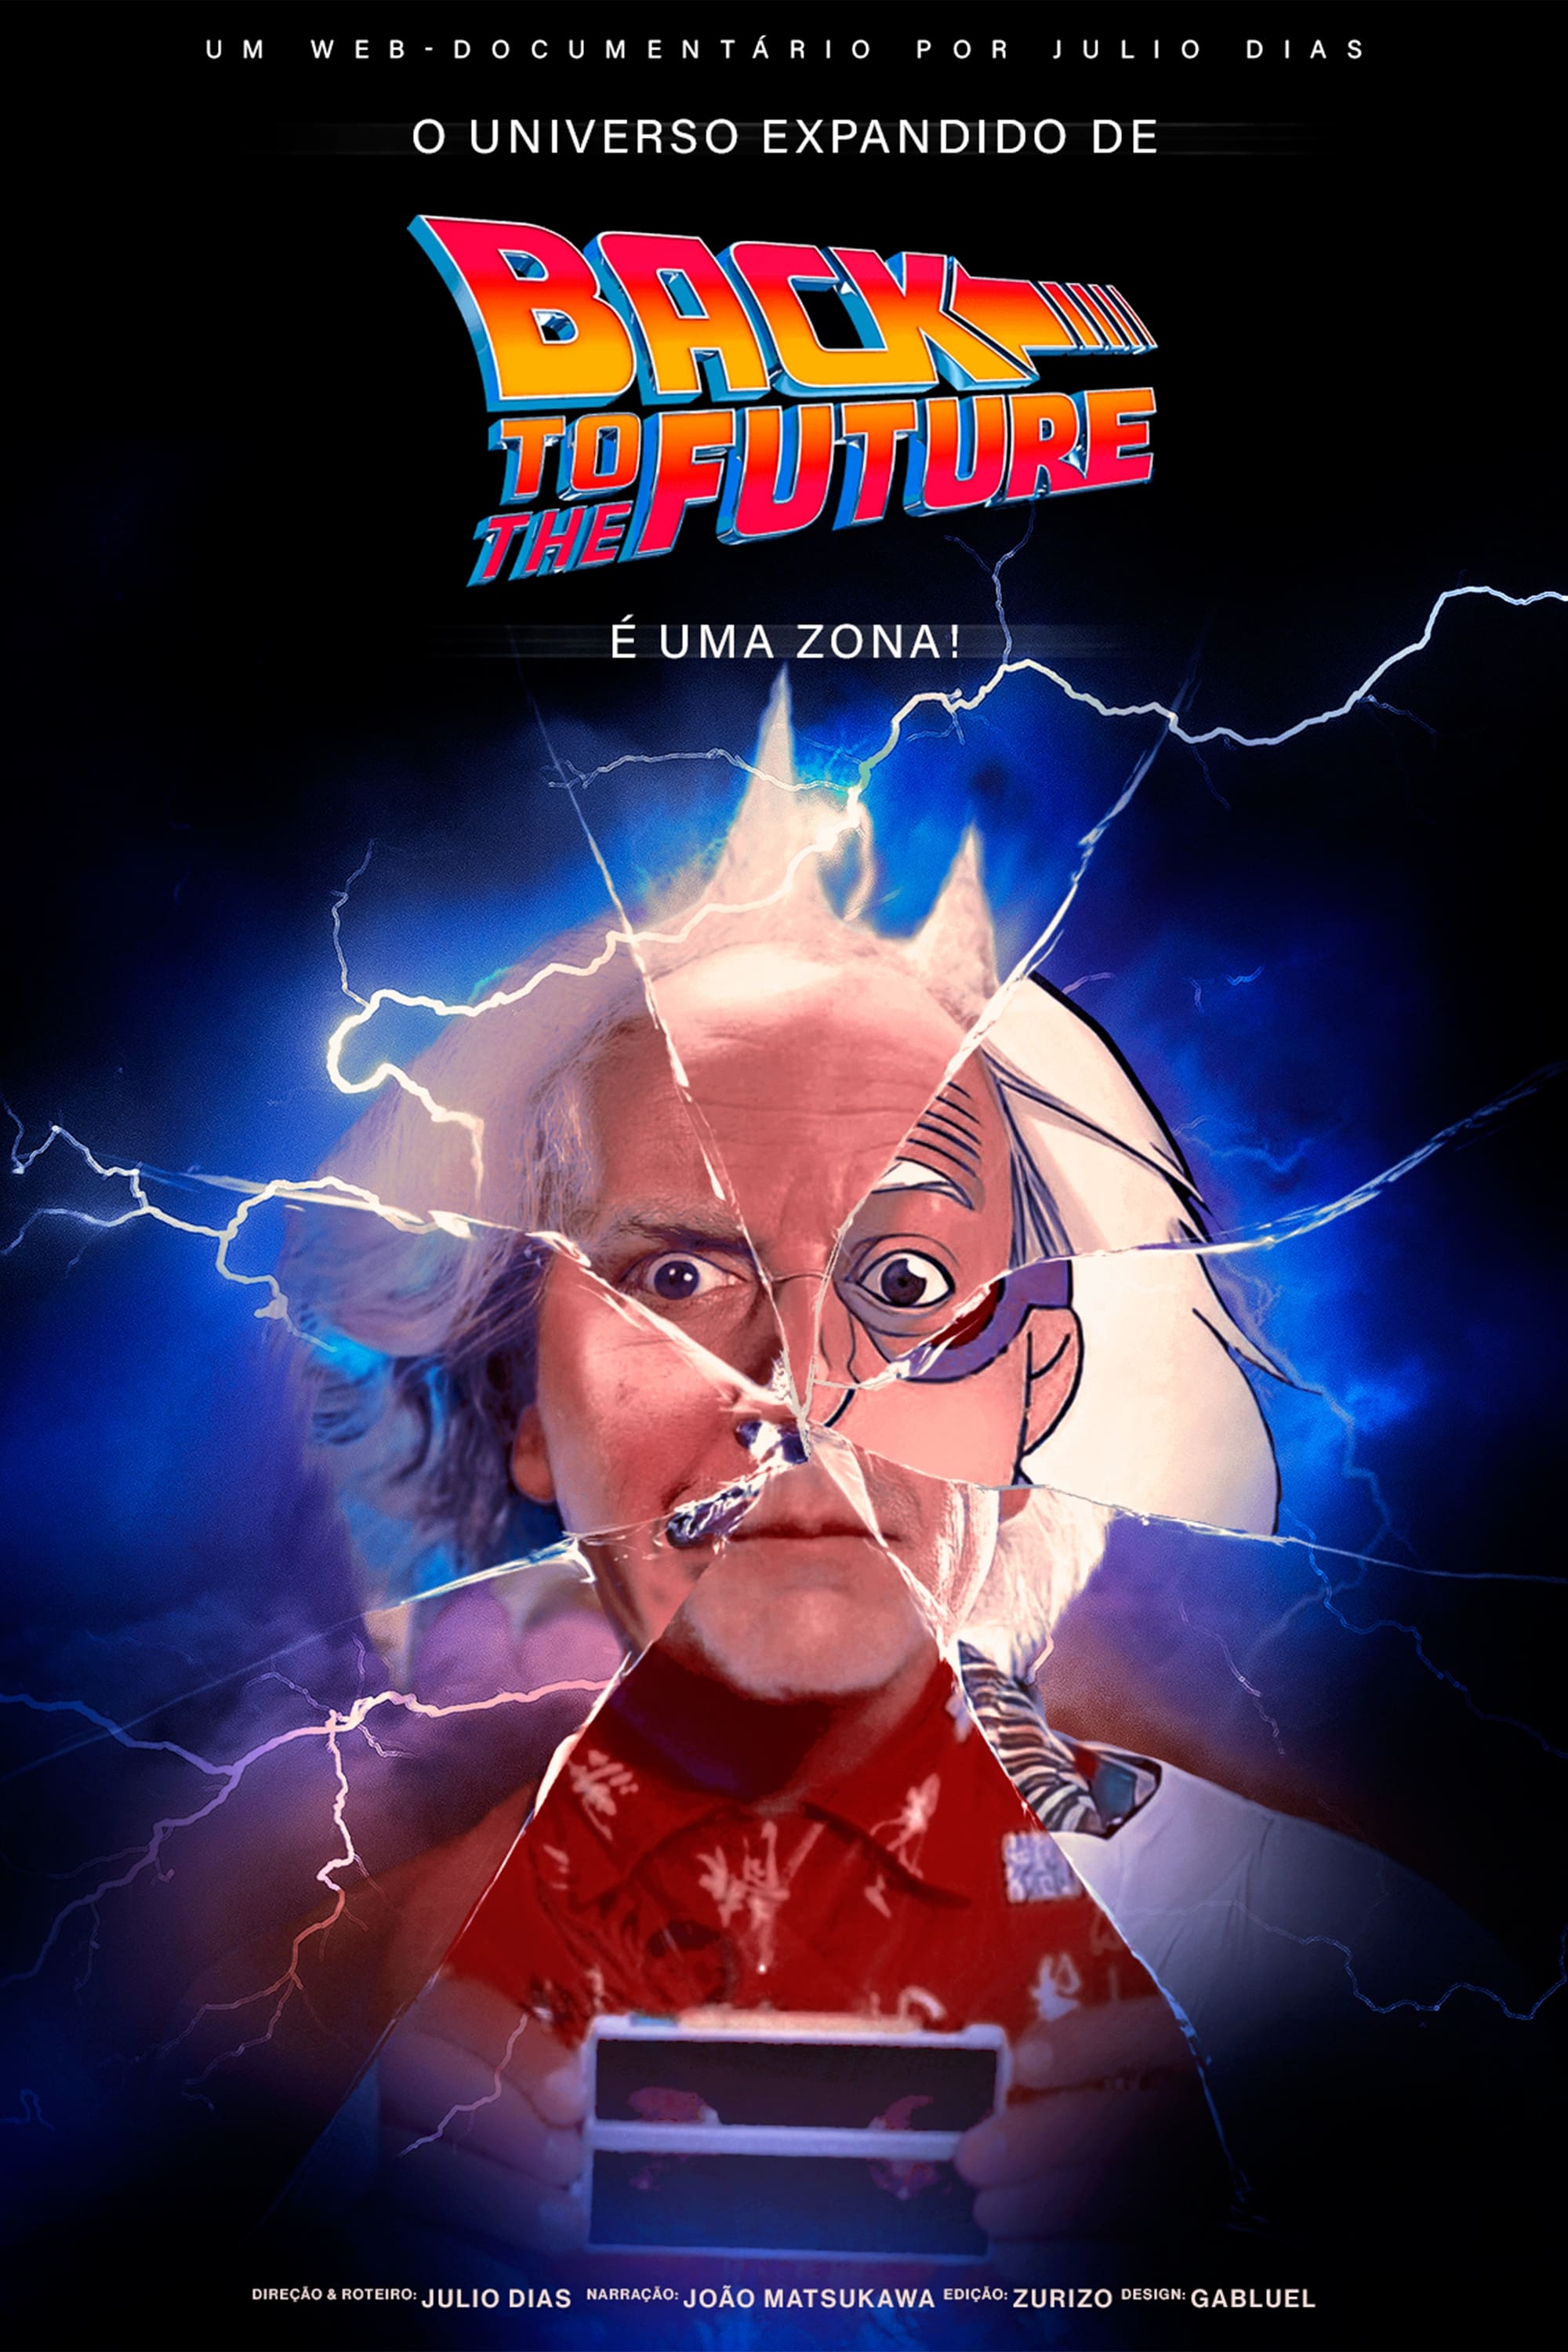 Cine Docs: Back to the Future